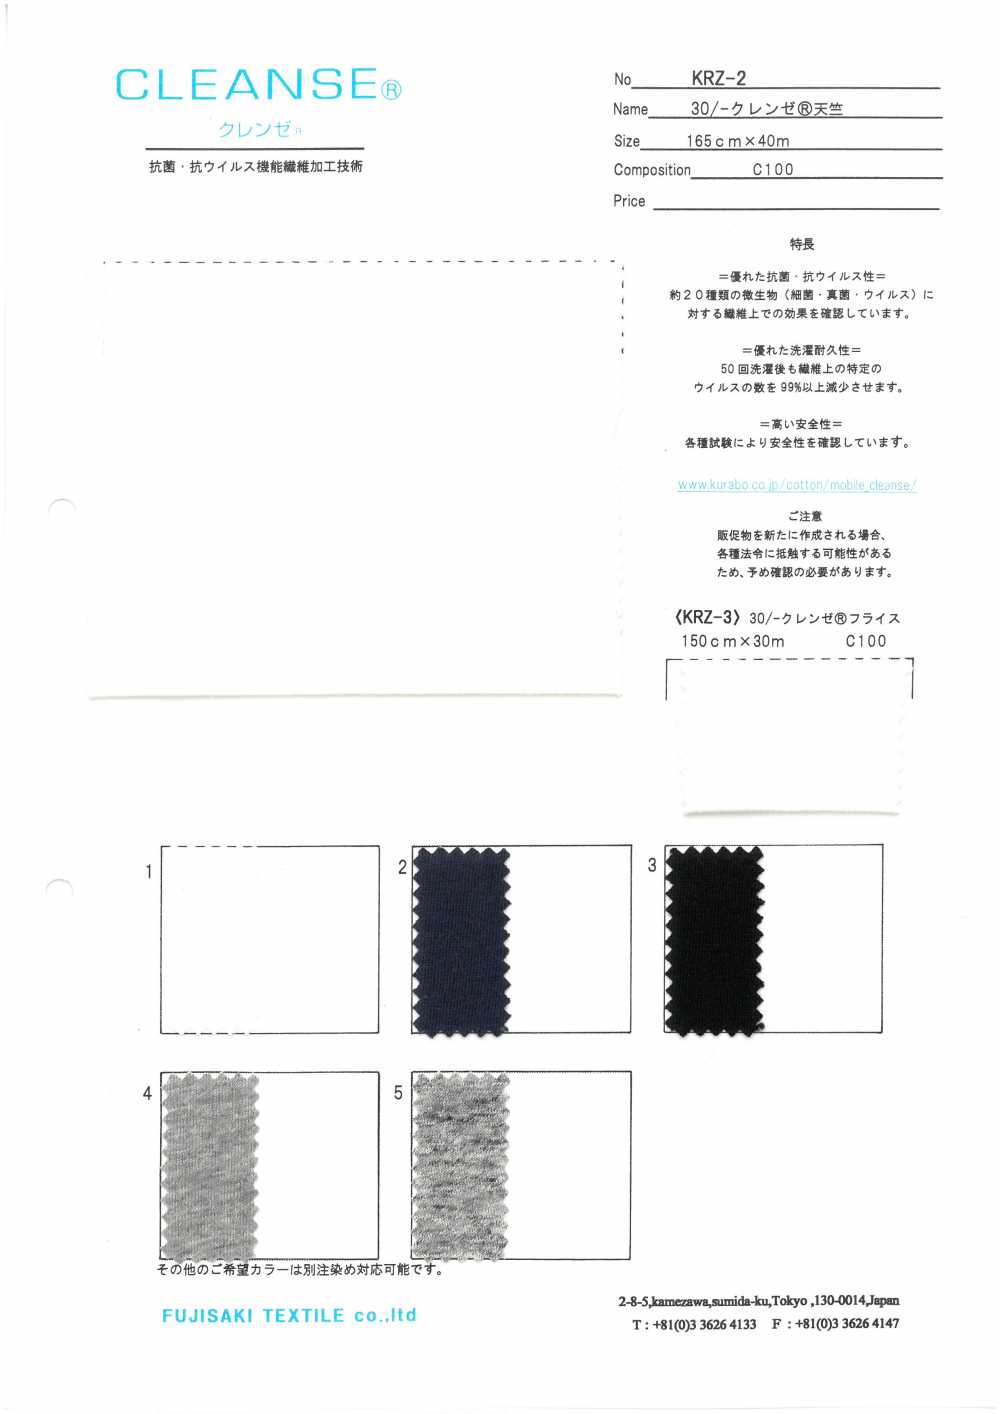 KRZ-2 30/- CLEANSE&# Jersey ;[Textile / Fabric] Fujisaki Textile